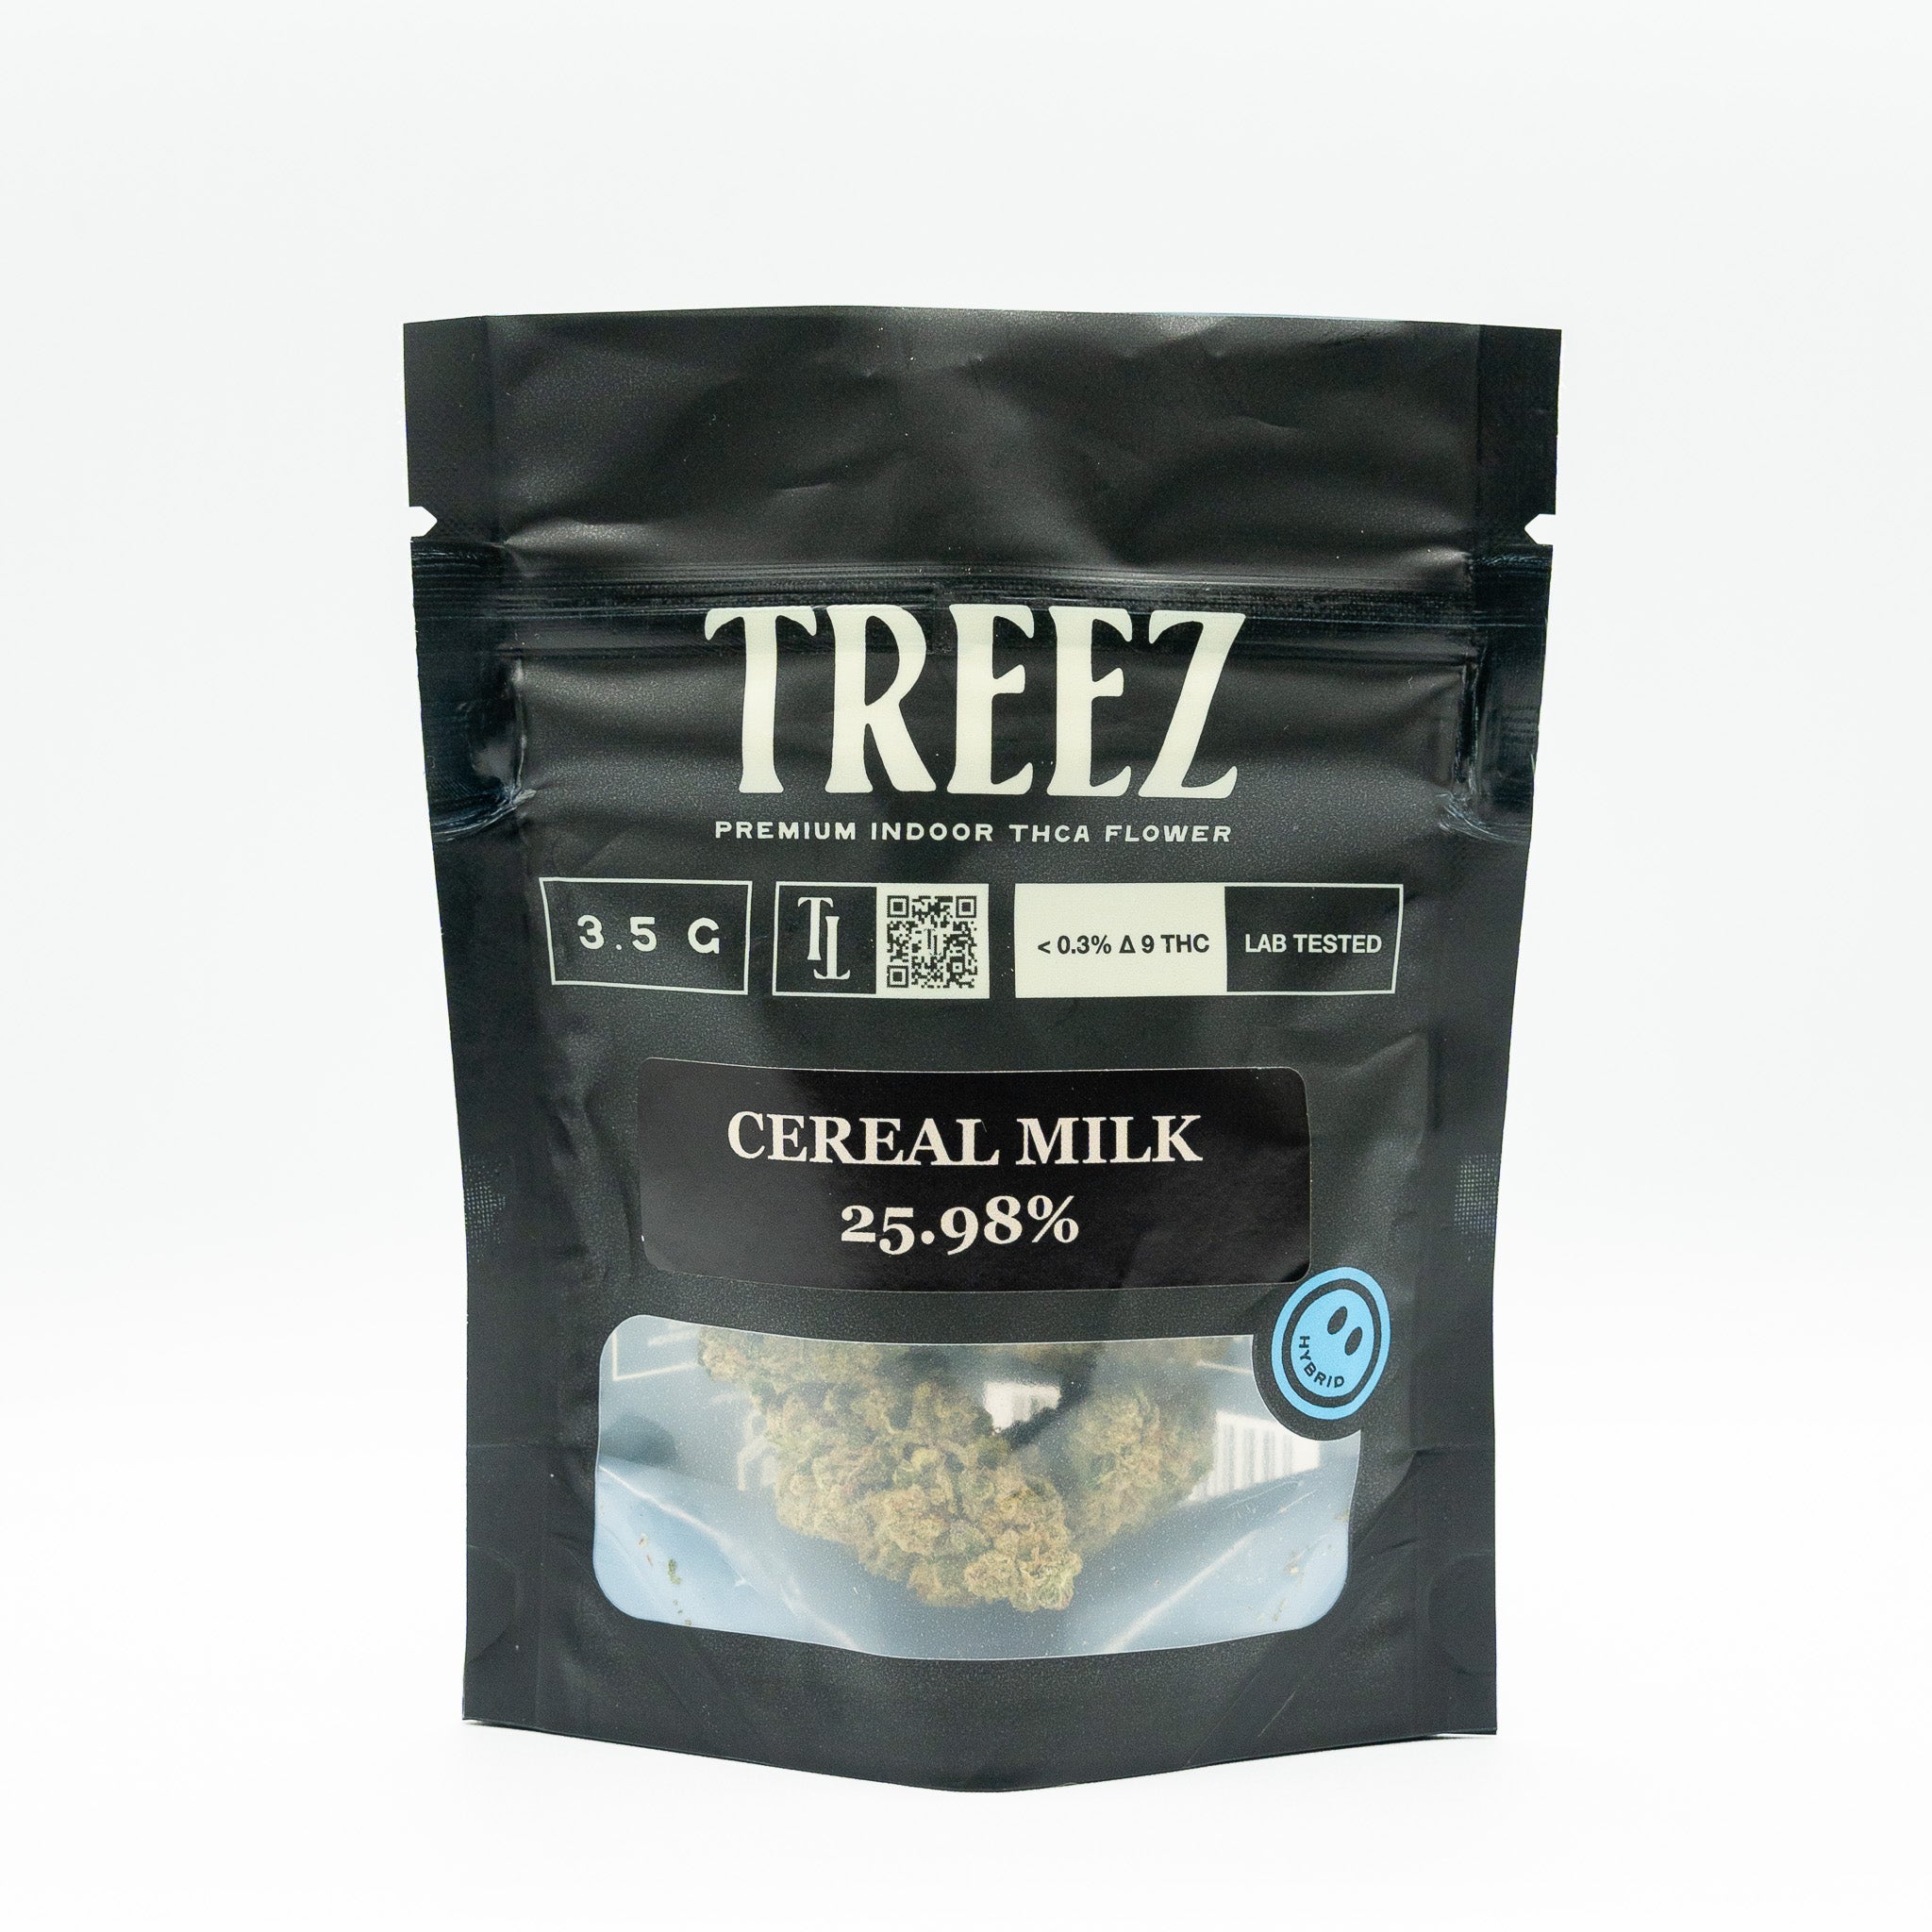 Treez - 3.5g THCA Flower Terplock Bags (8ct)